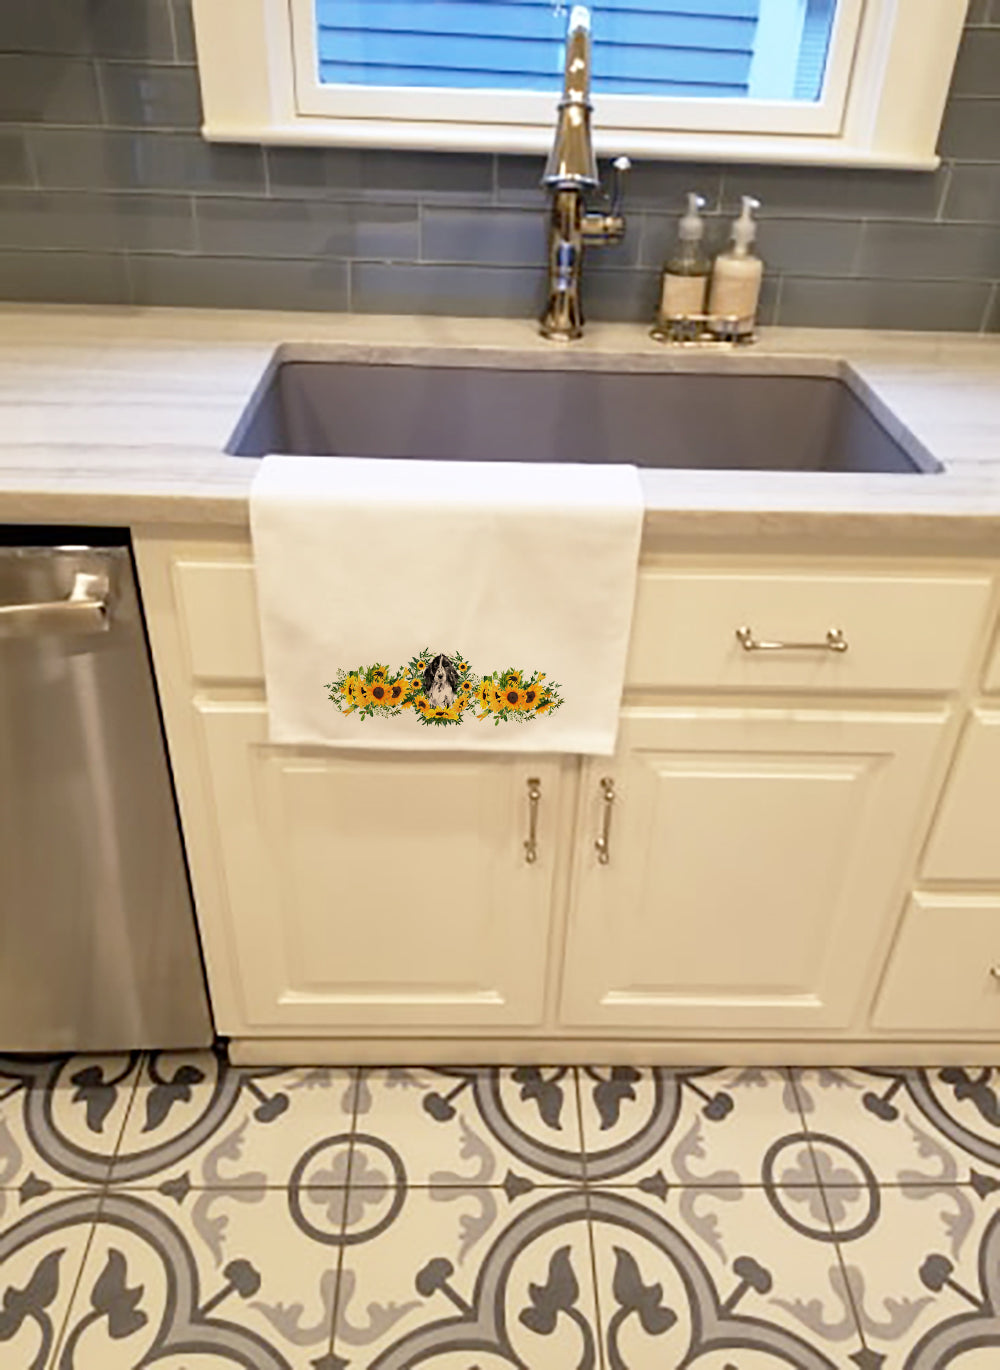 Buy this Black Parti Cocker Spaniel in Sunflowers White Kitchen Towel Set of 2